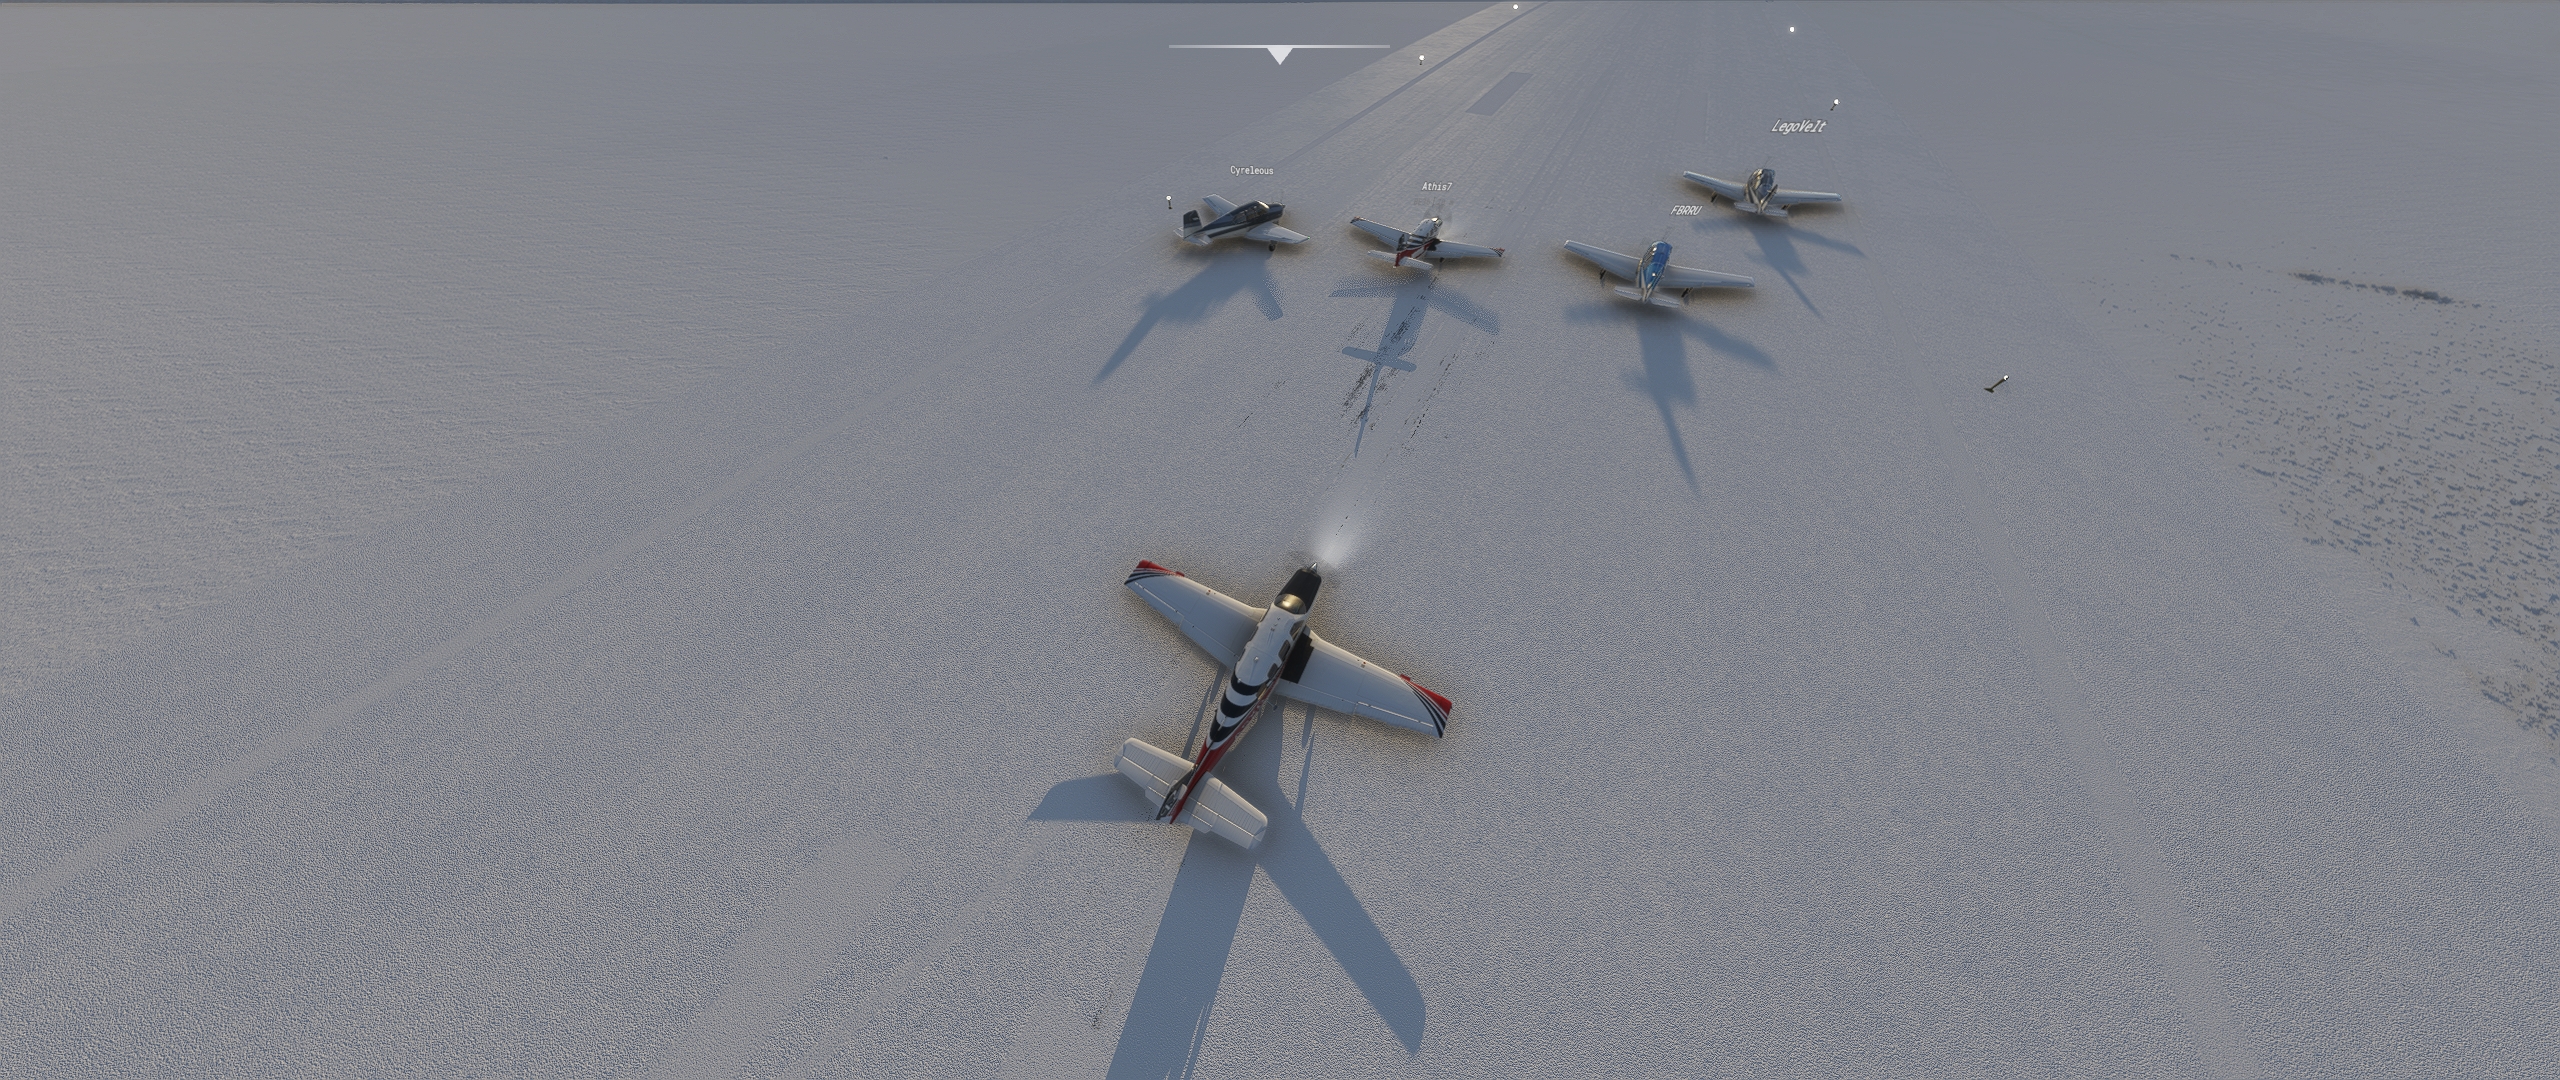 2021-02-13 17_04_54-Microsoft Flight Simulator - 1.12.13.0.jpg